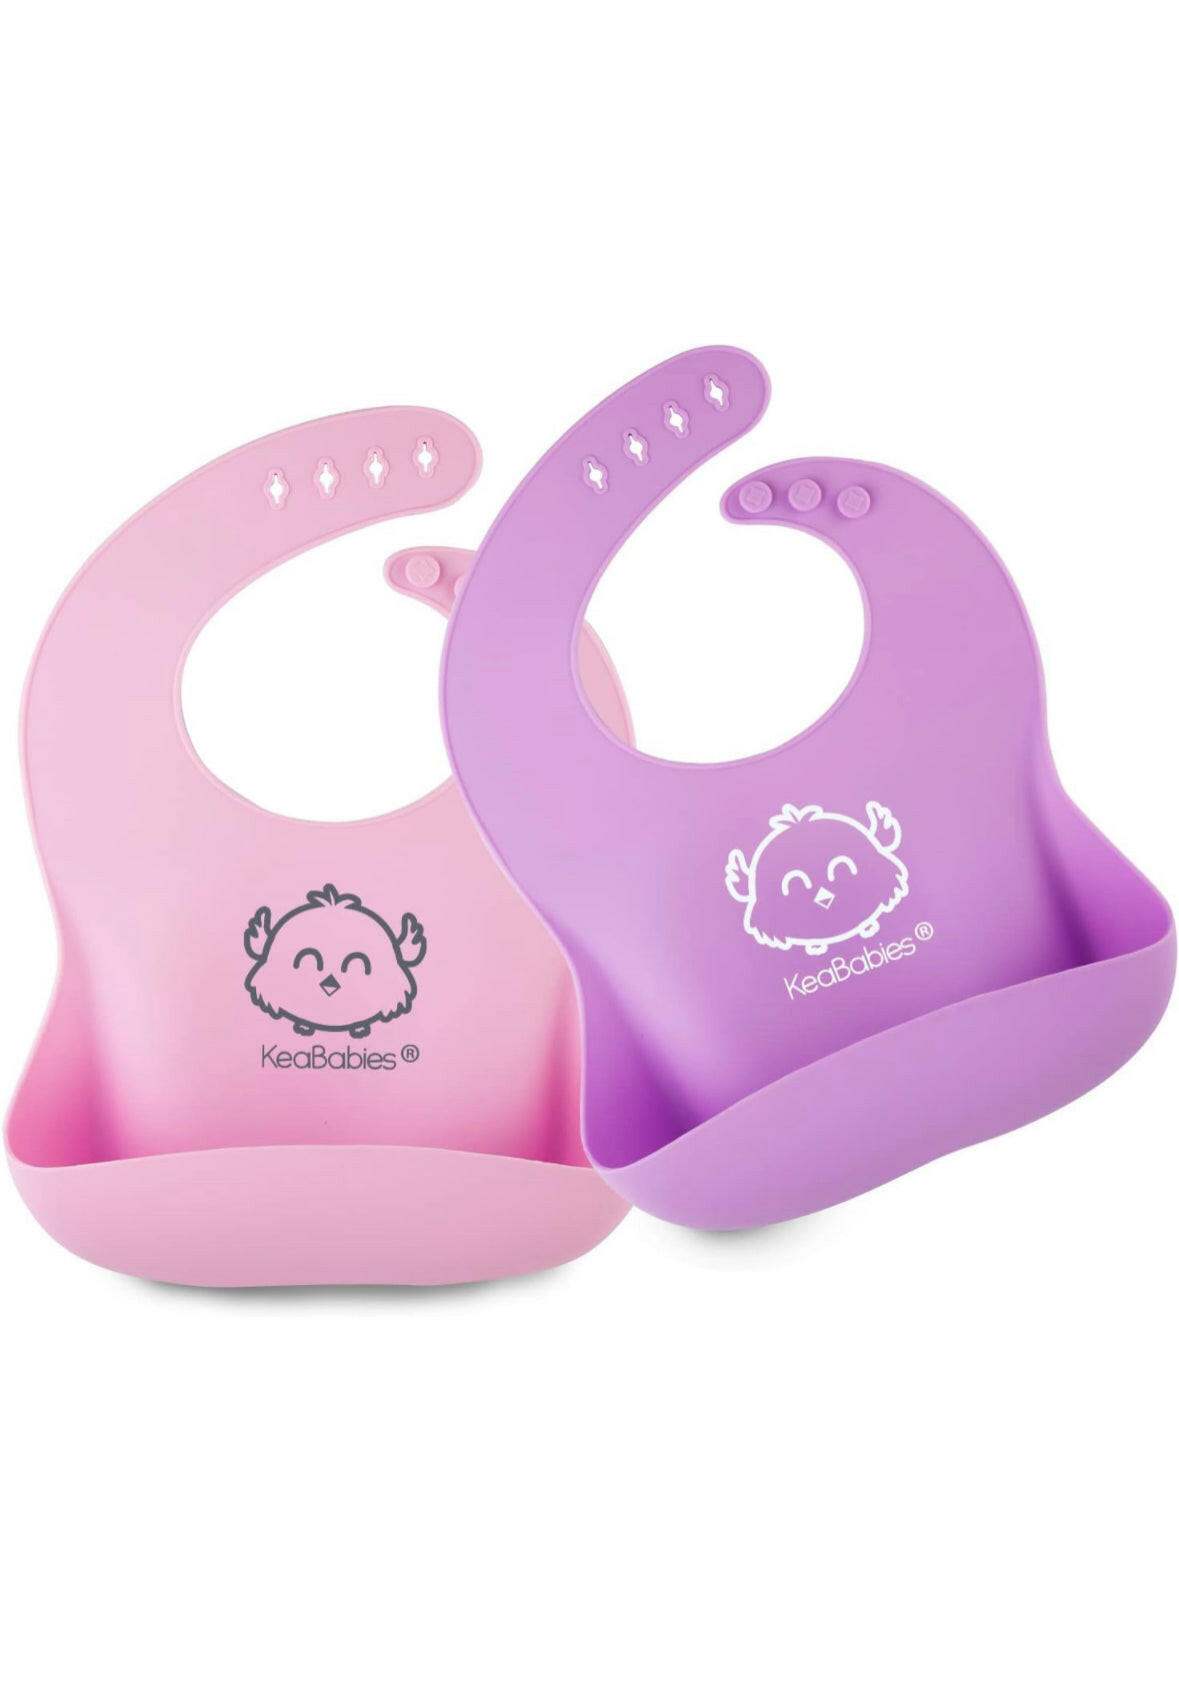 2-Pack Waterproof Silicone Bibs for Babies